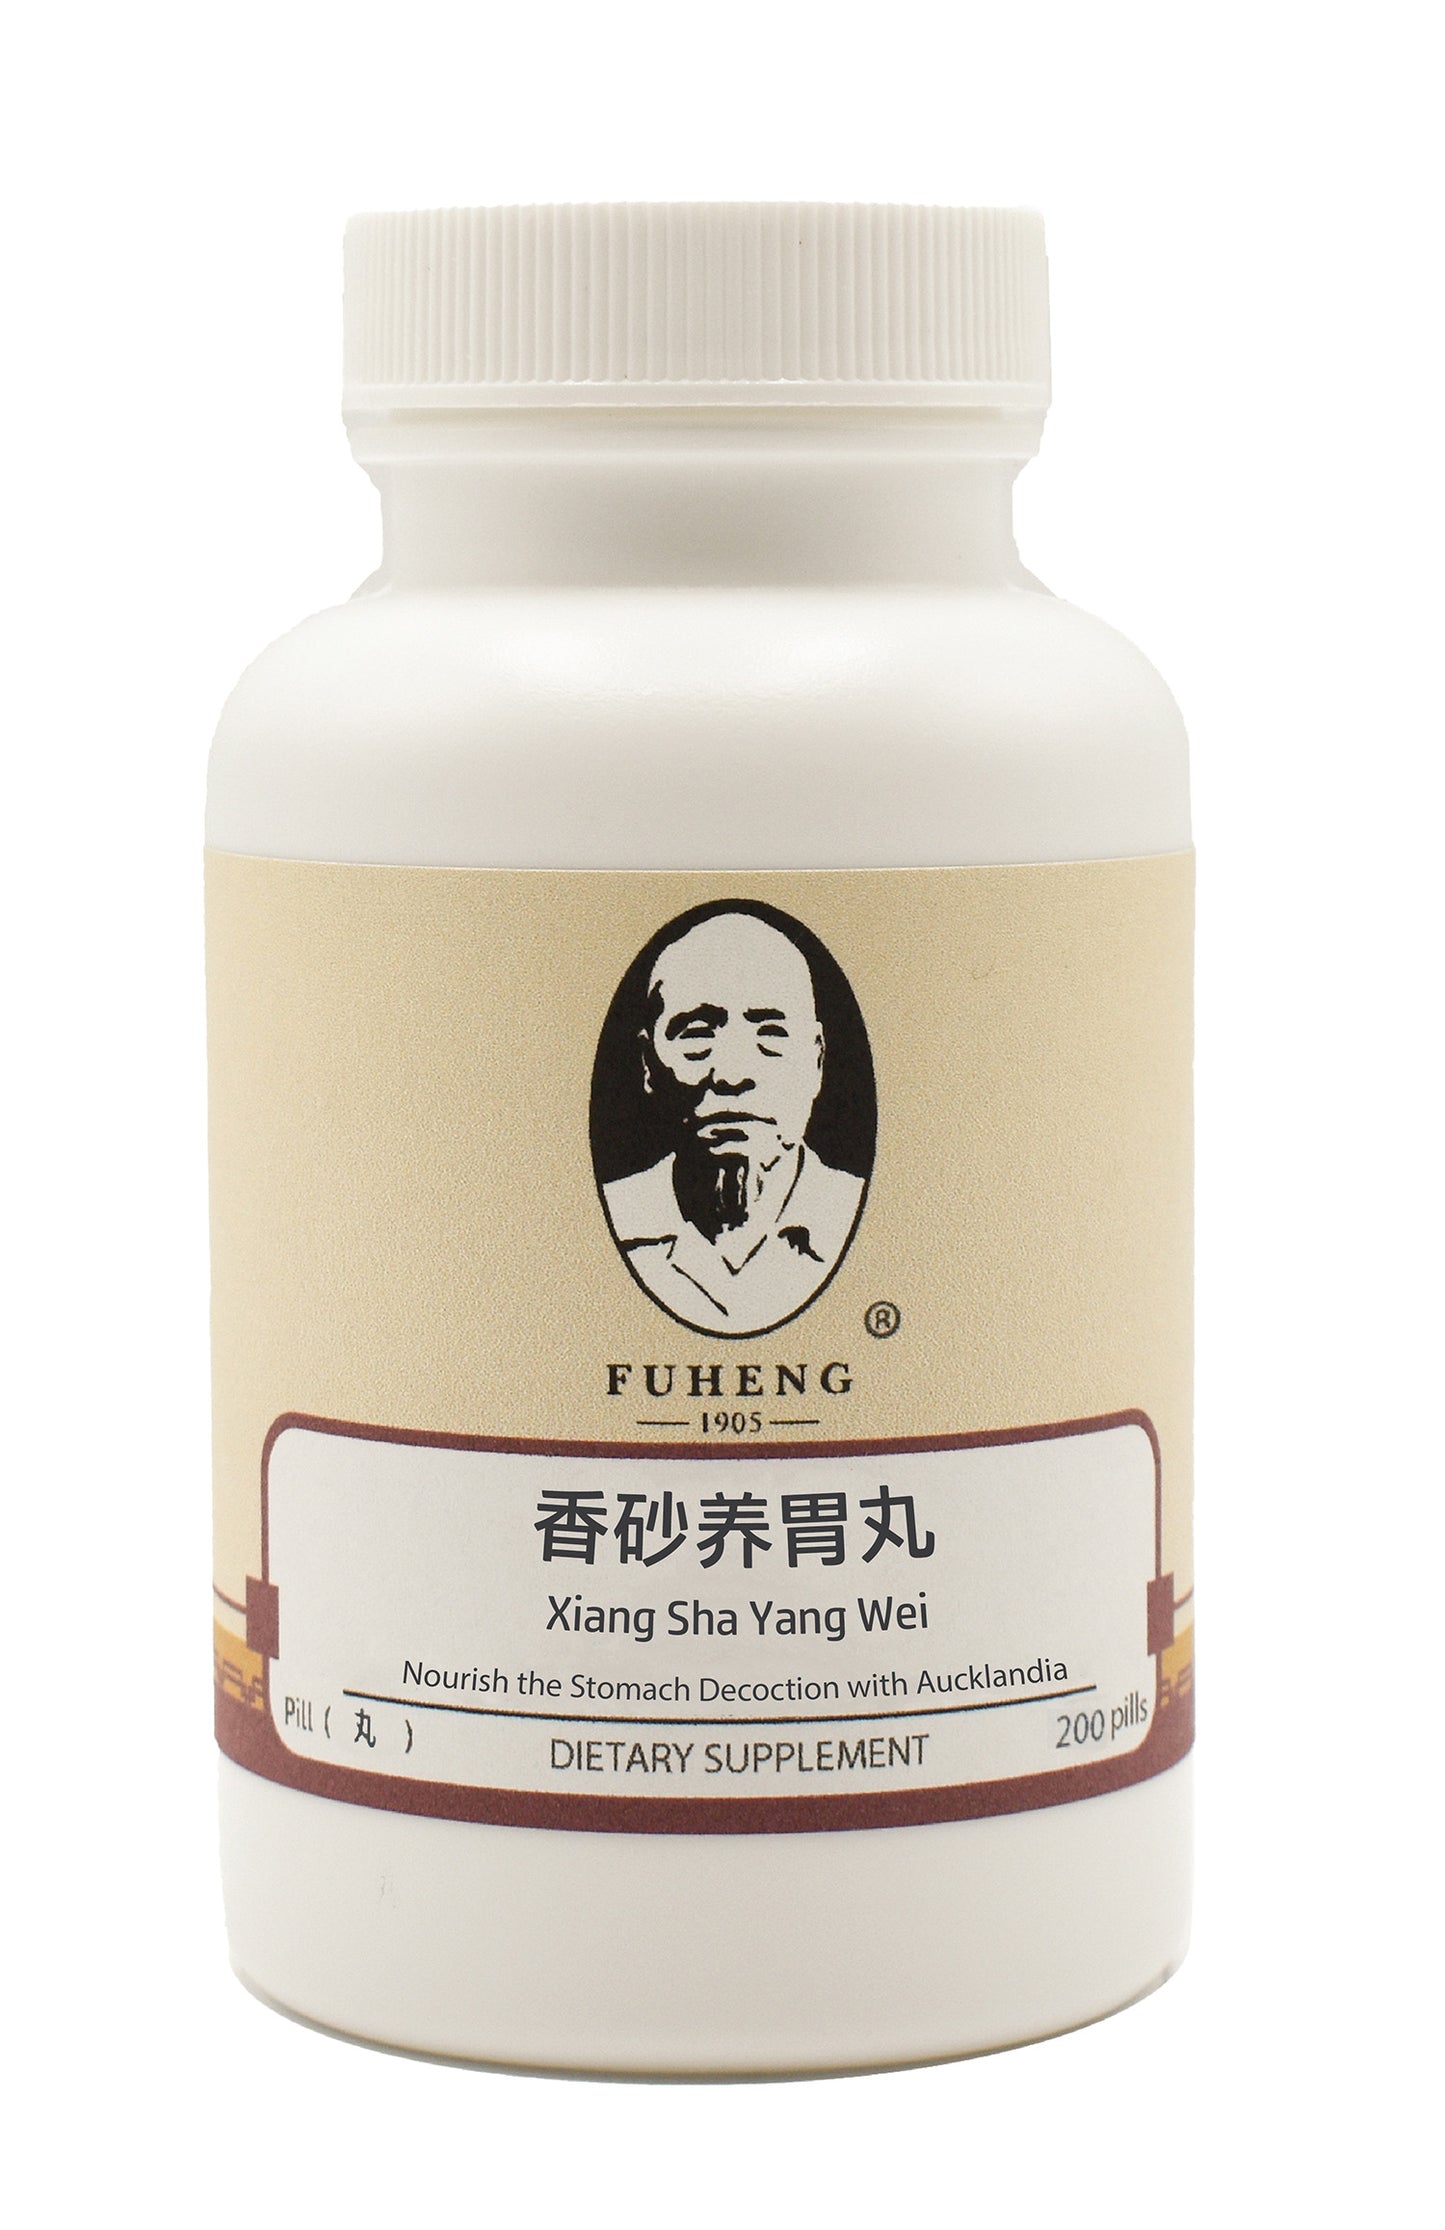 Xiang Sha Yang Wei Wan - 香砂养胃丸 - 丸剂 - Nourish the Stomach Decoction with Aucklandia and Amomum - FUHENG福恒 - Since 1905 - 200 pills